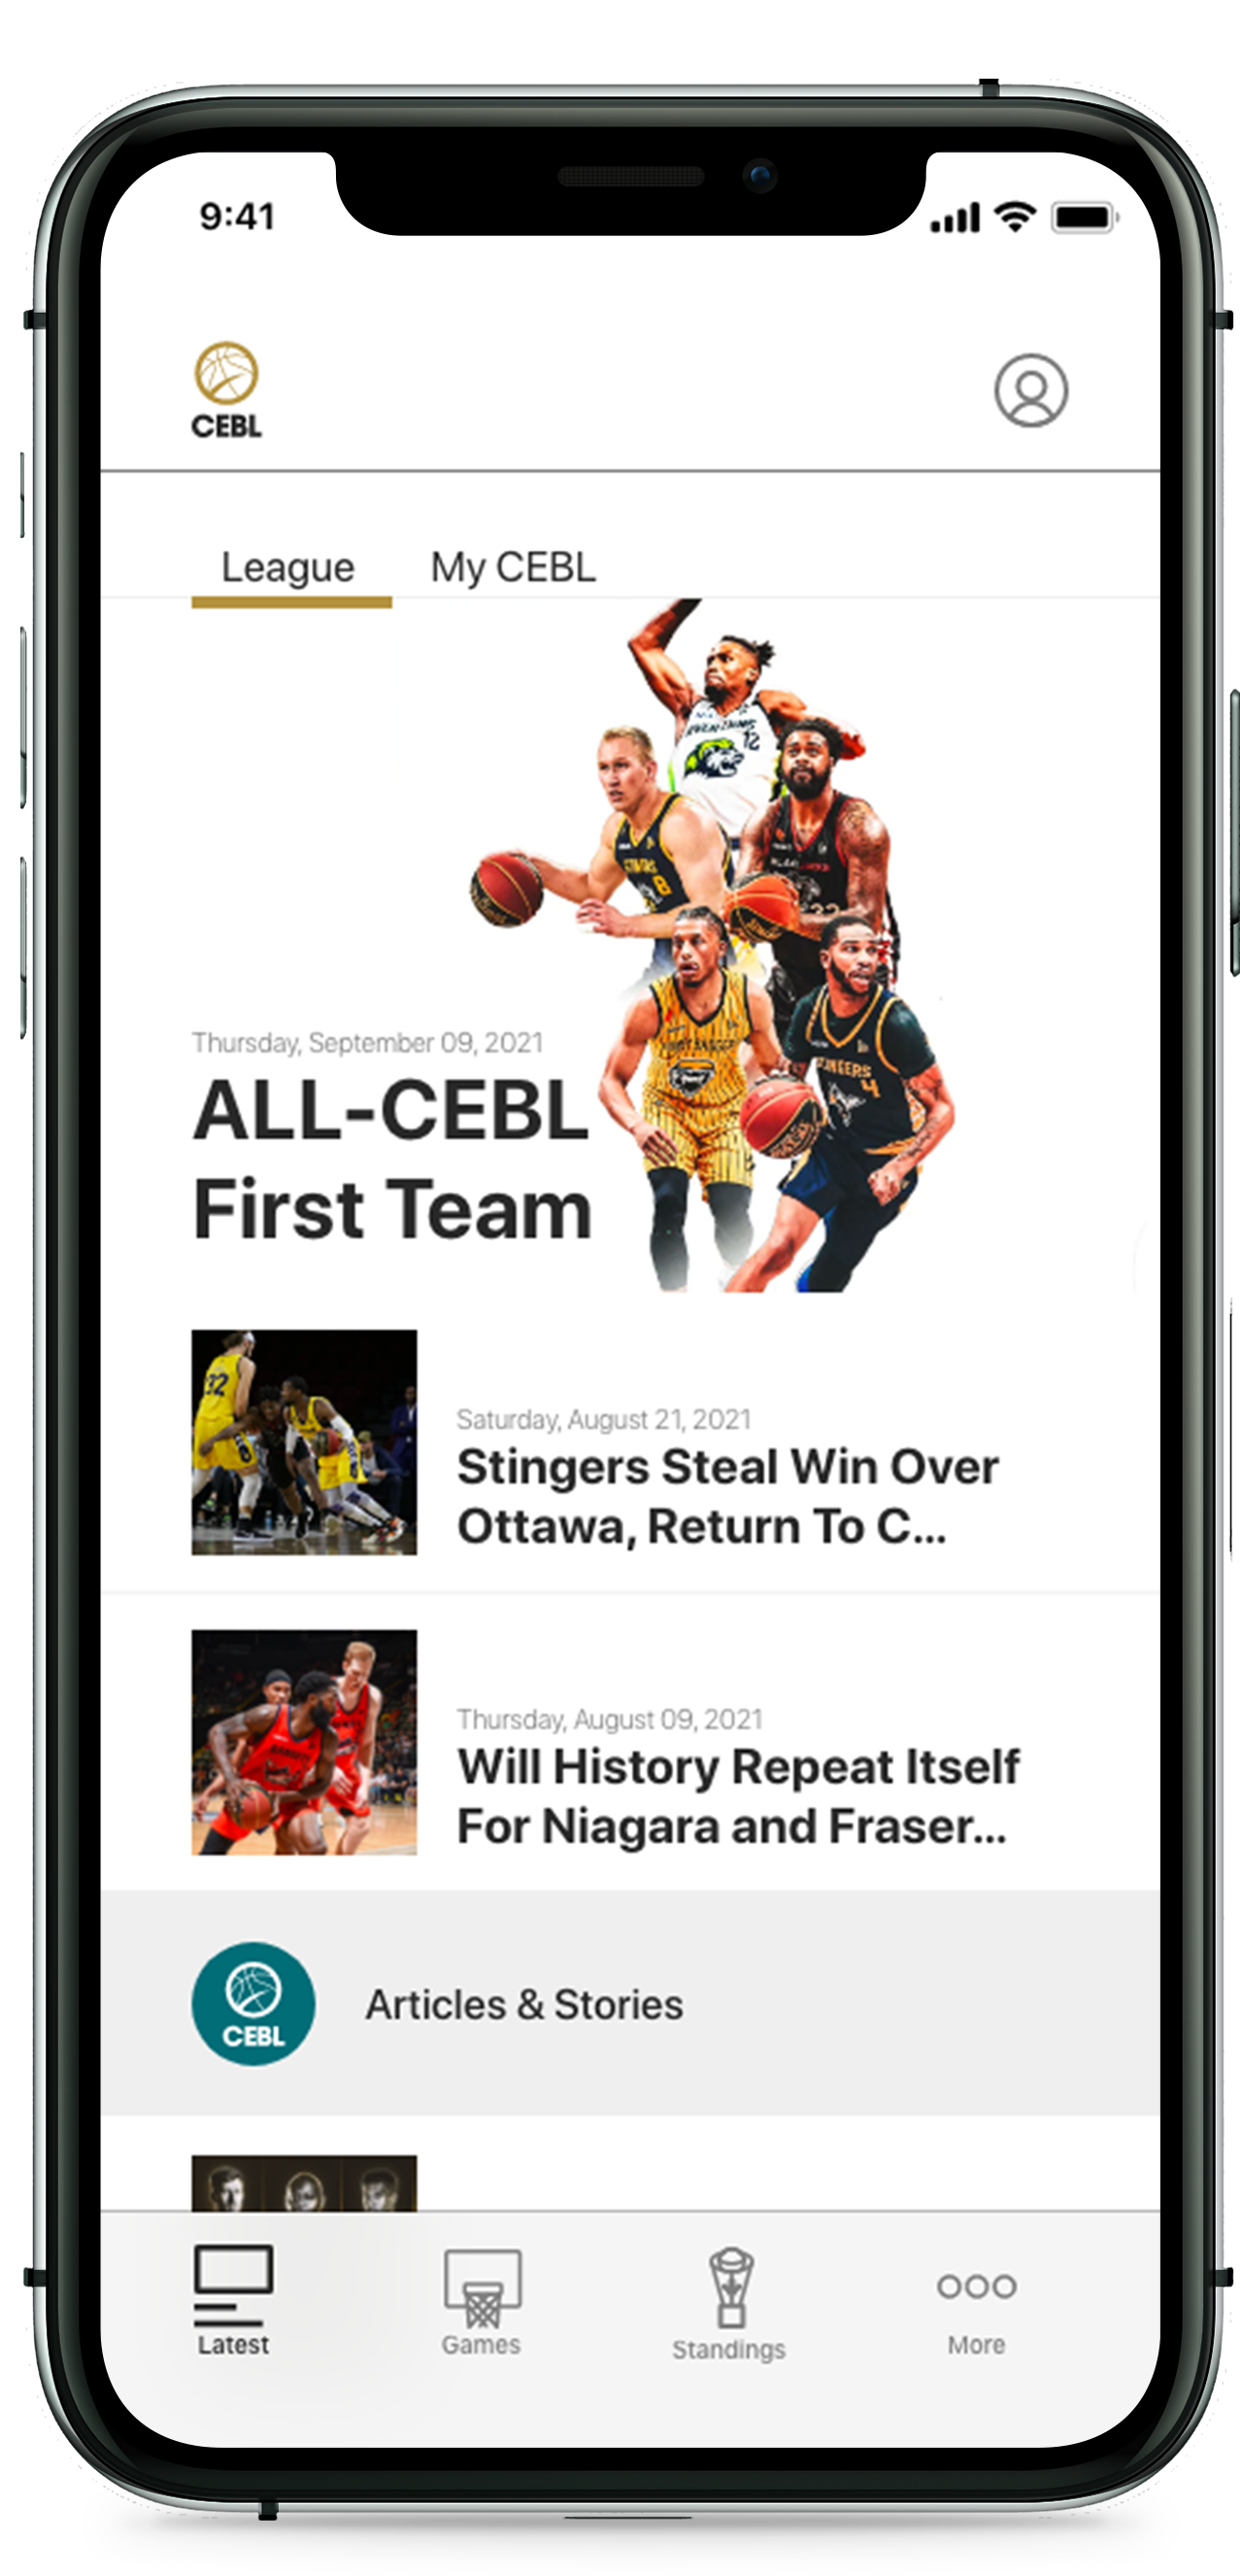 Home screen of the CEBL app